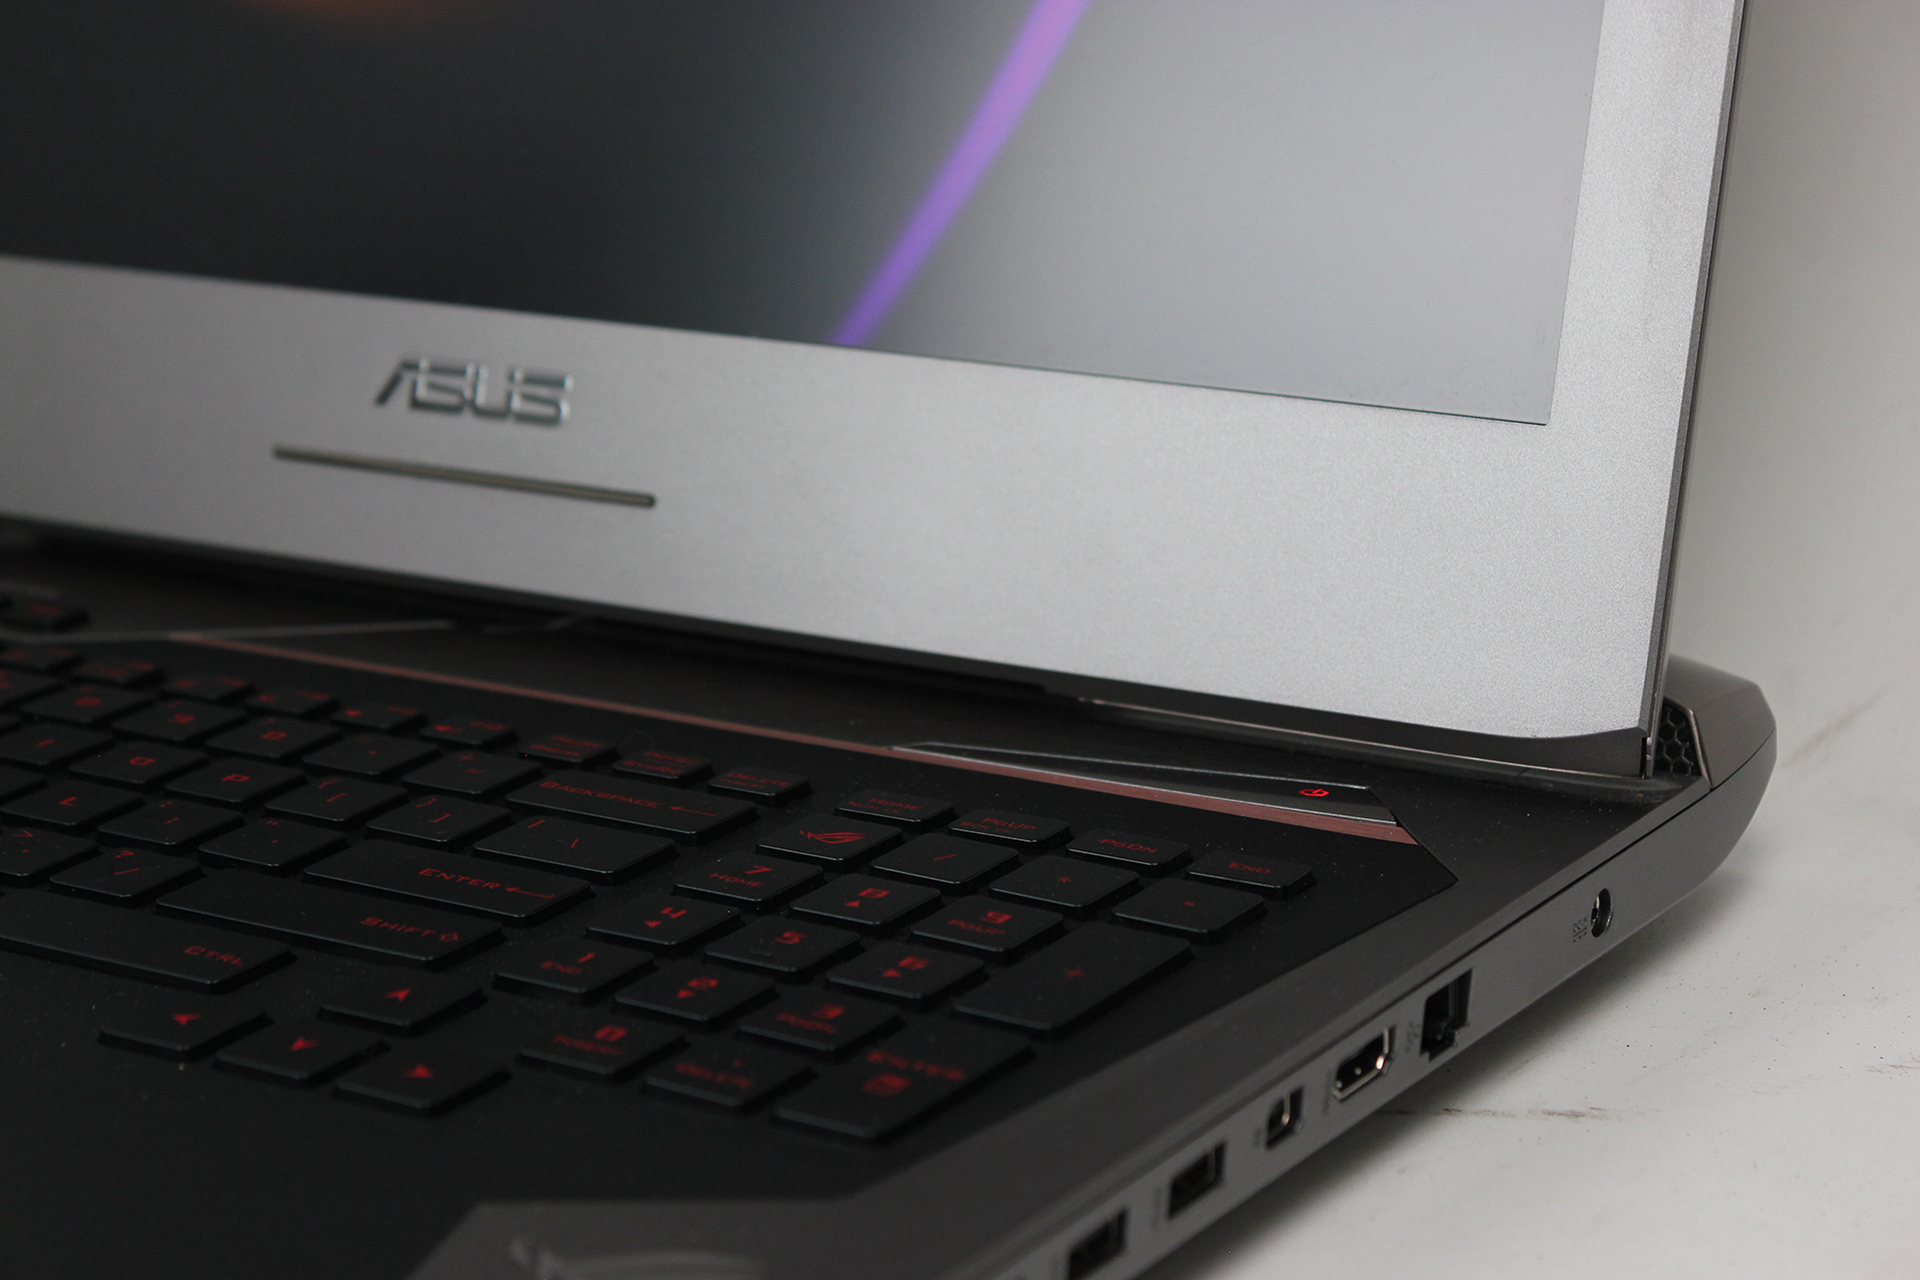 Asus Rog G752Vt-Dh72 (Laptop) Review 2